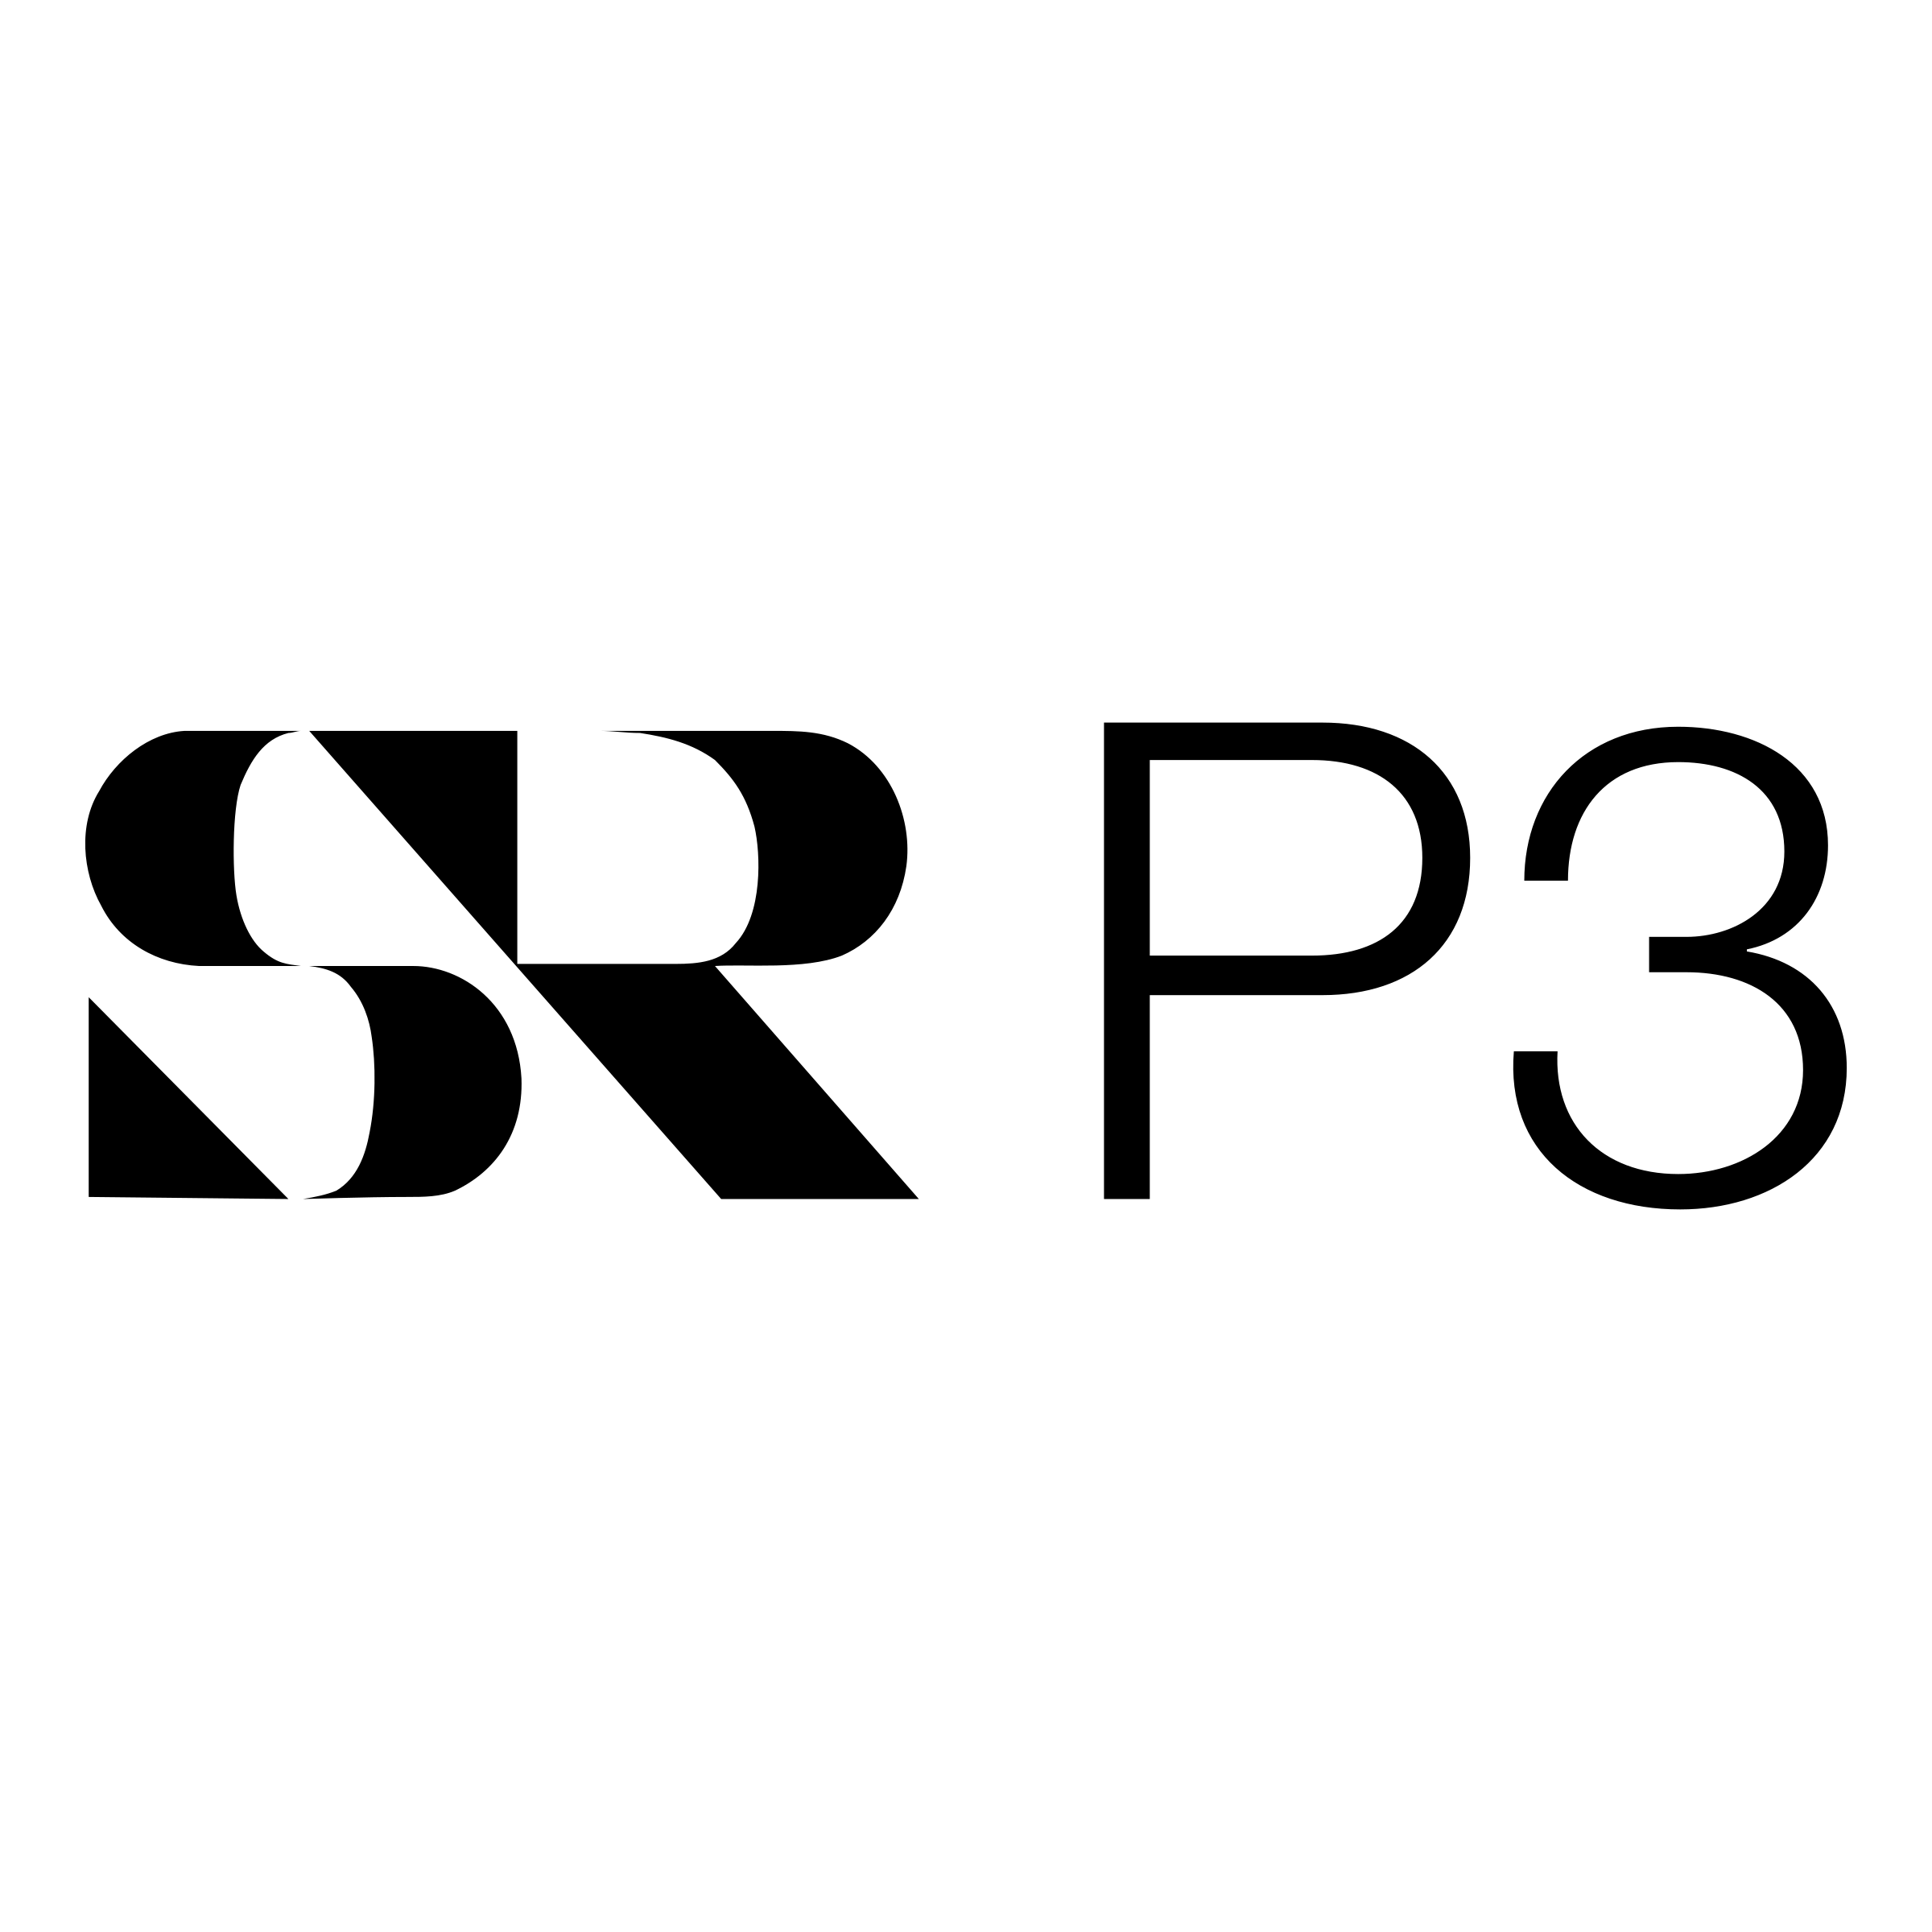 P3 Logo - SR P3 Logo PNG Transparent & SVG Vector - Freebie Supply